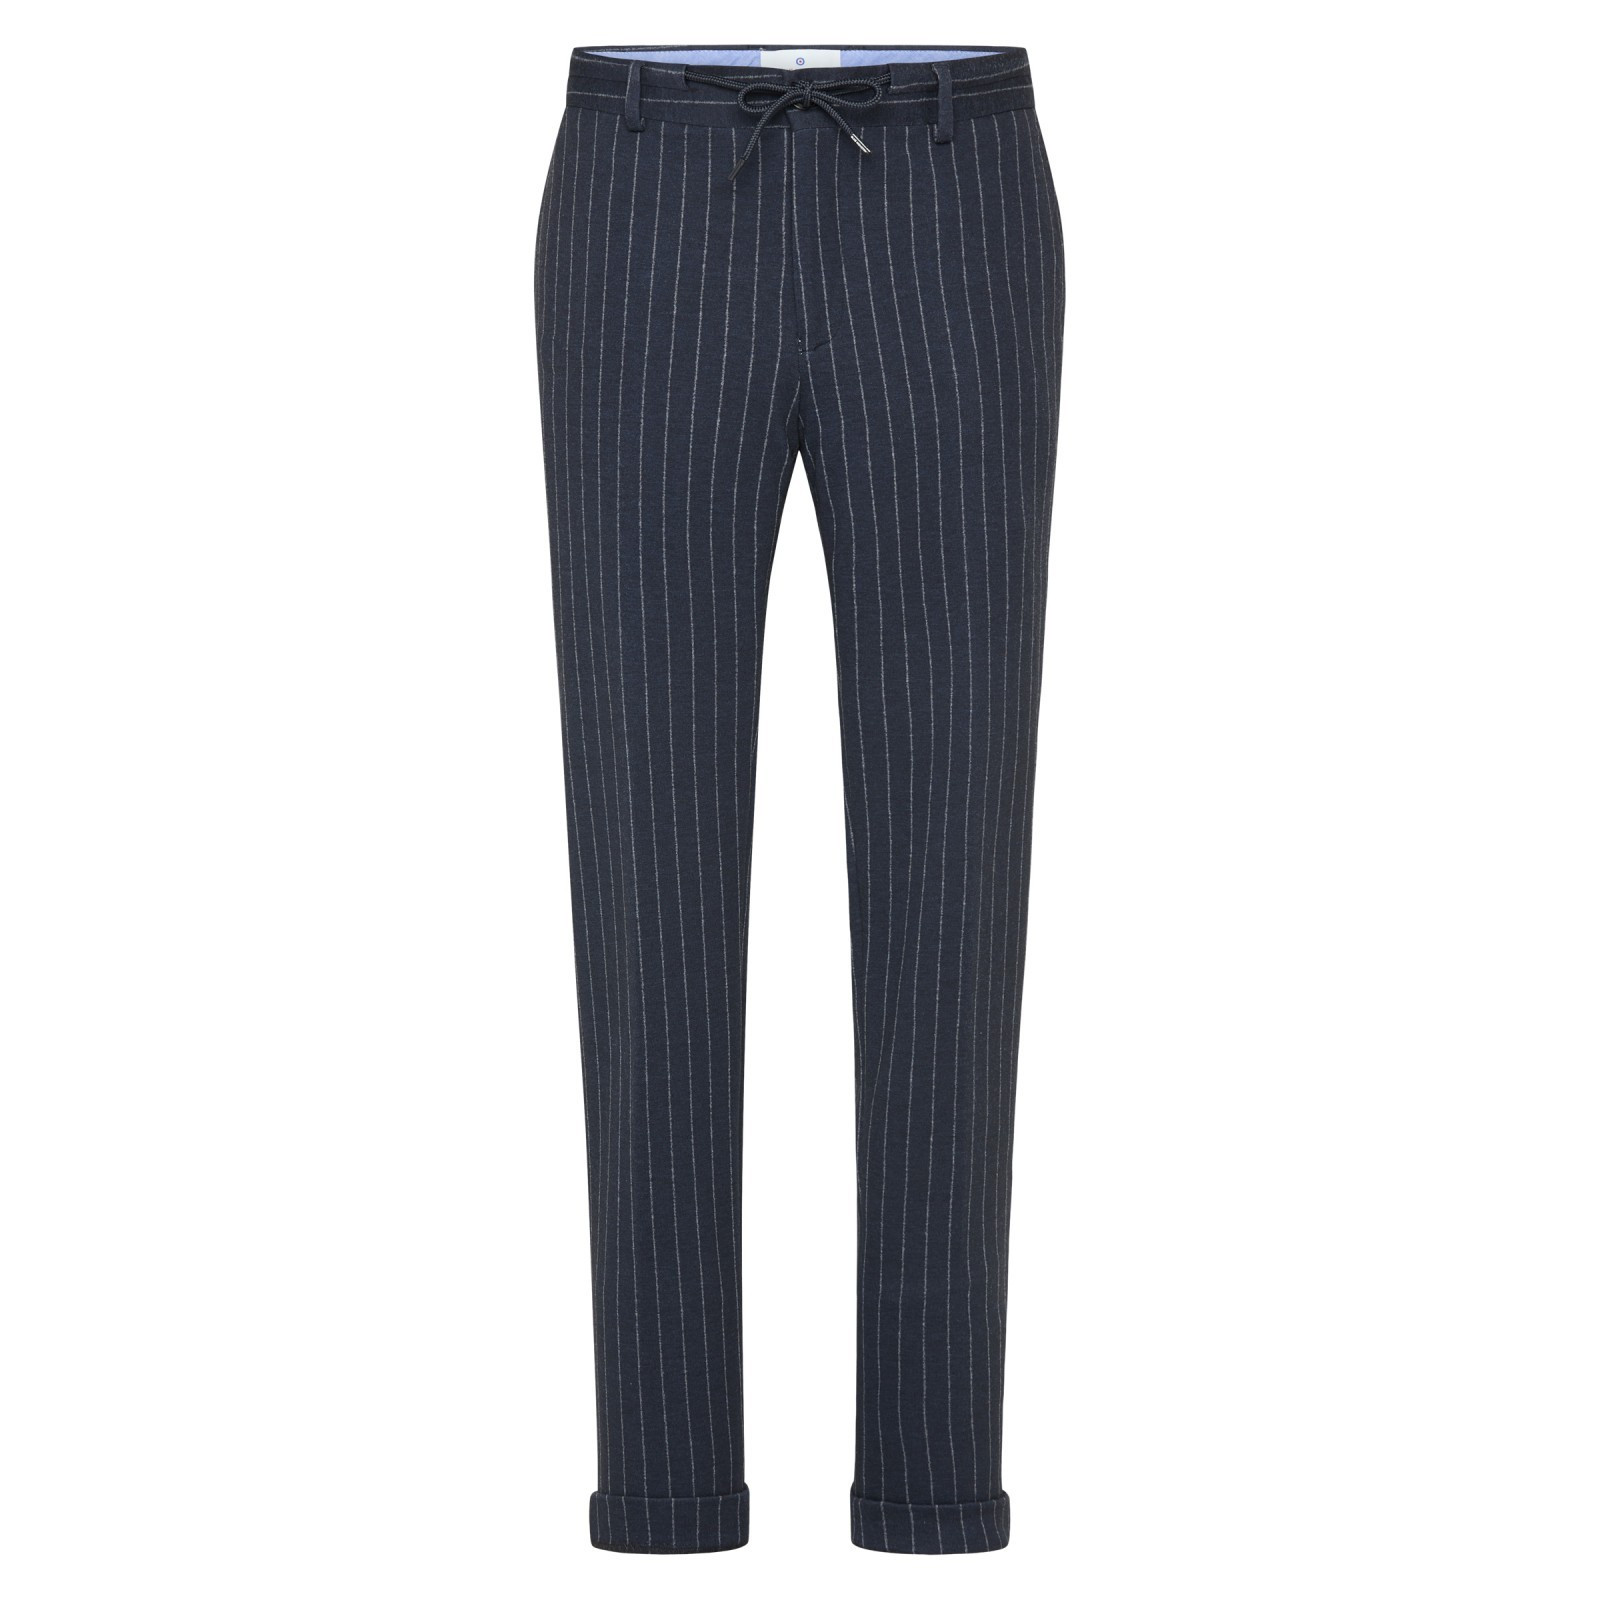 Afbeelding van Blue Industry Jersey pants streep